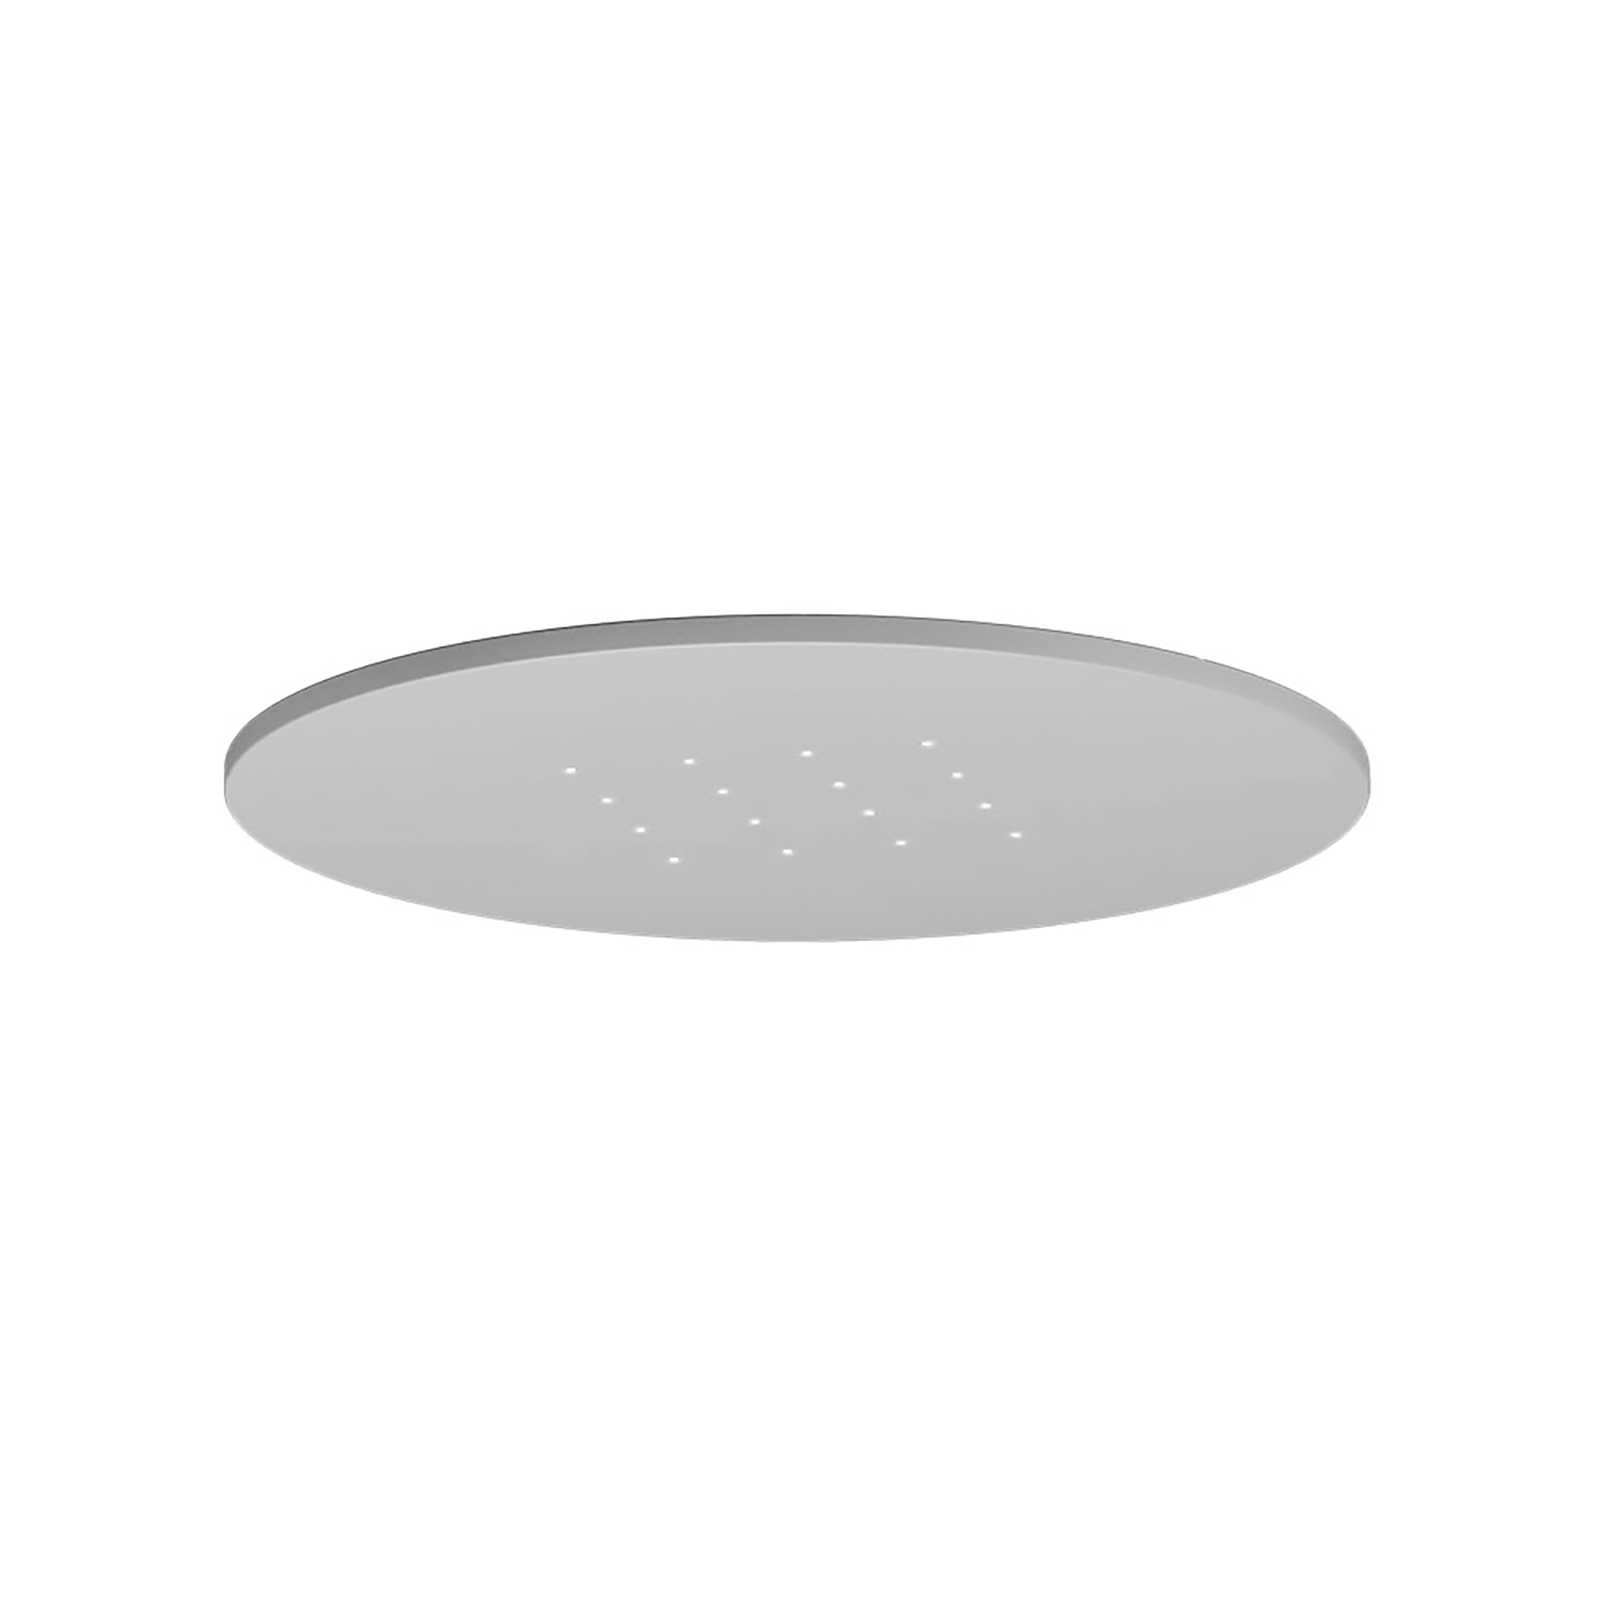 LEDWORKS Sono-LED Round 16 plafond 930 38° blanc